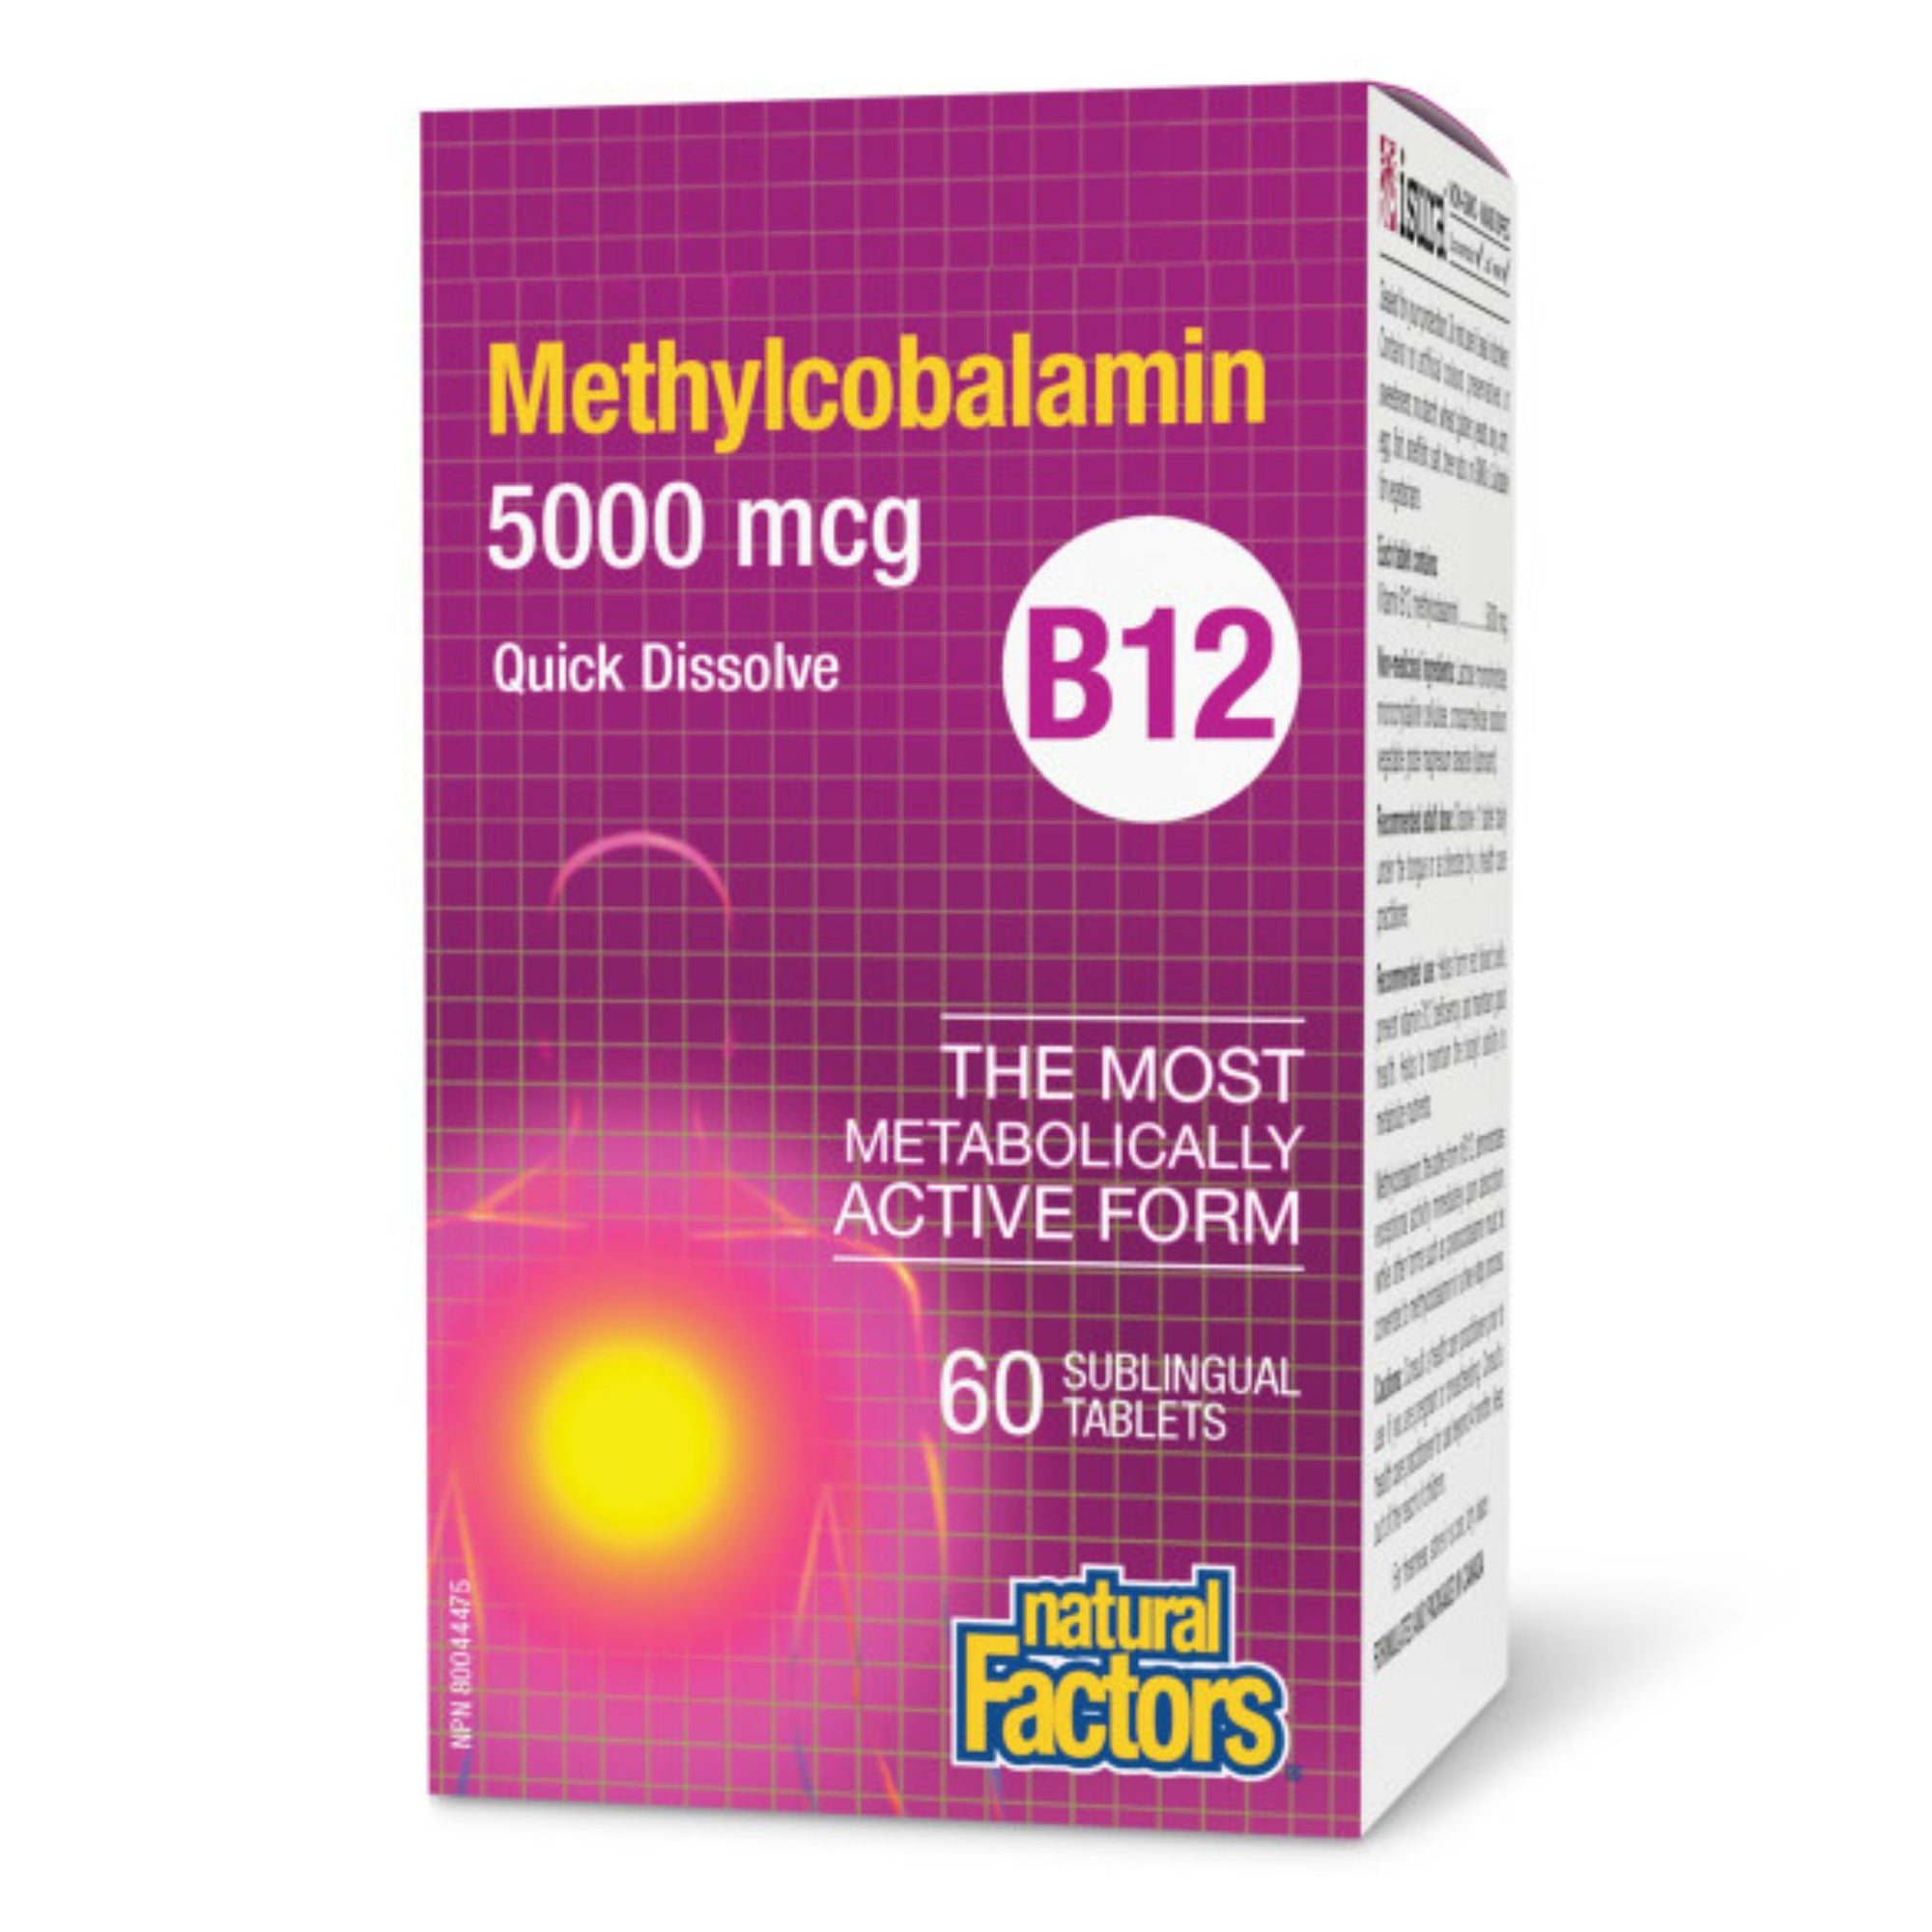 Natural Factors Vitamin B12 Methylcobalamine 5000mcg - 60 sublingual tablets - the most metabolically active form. 